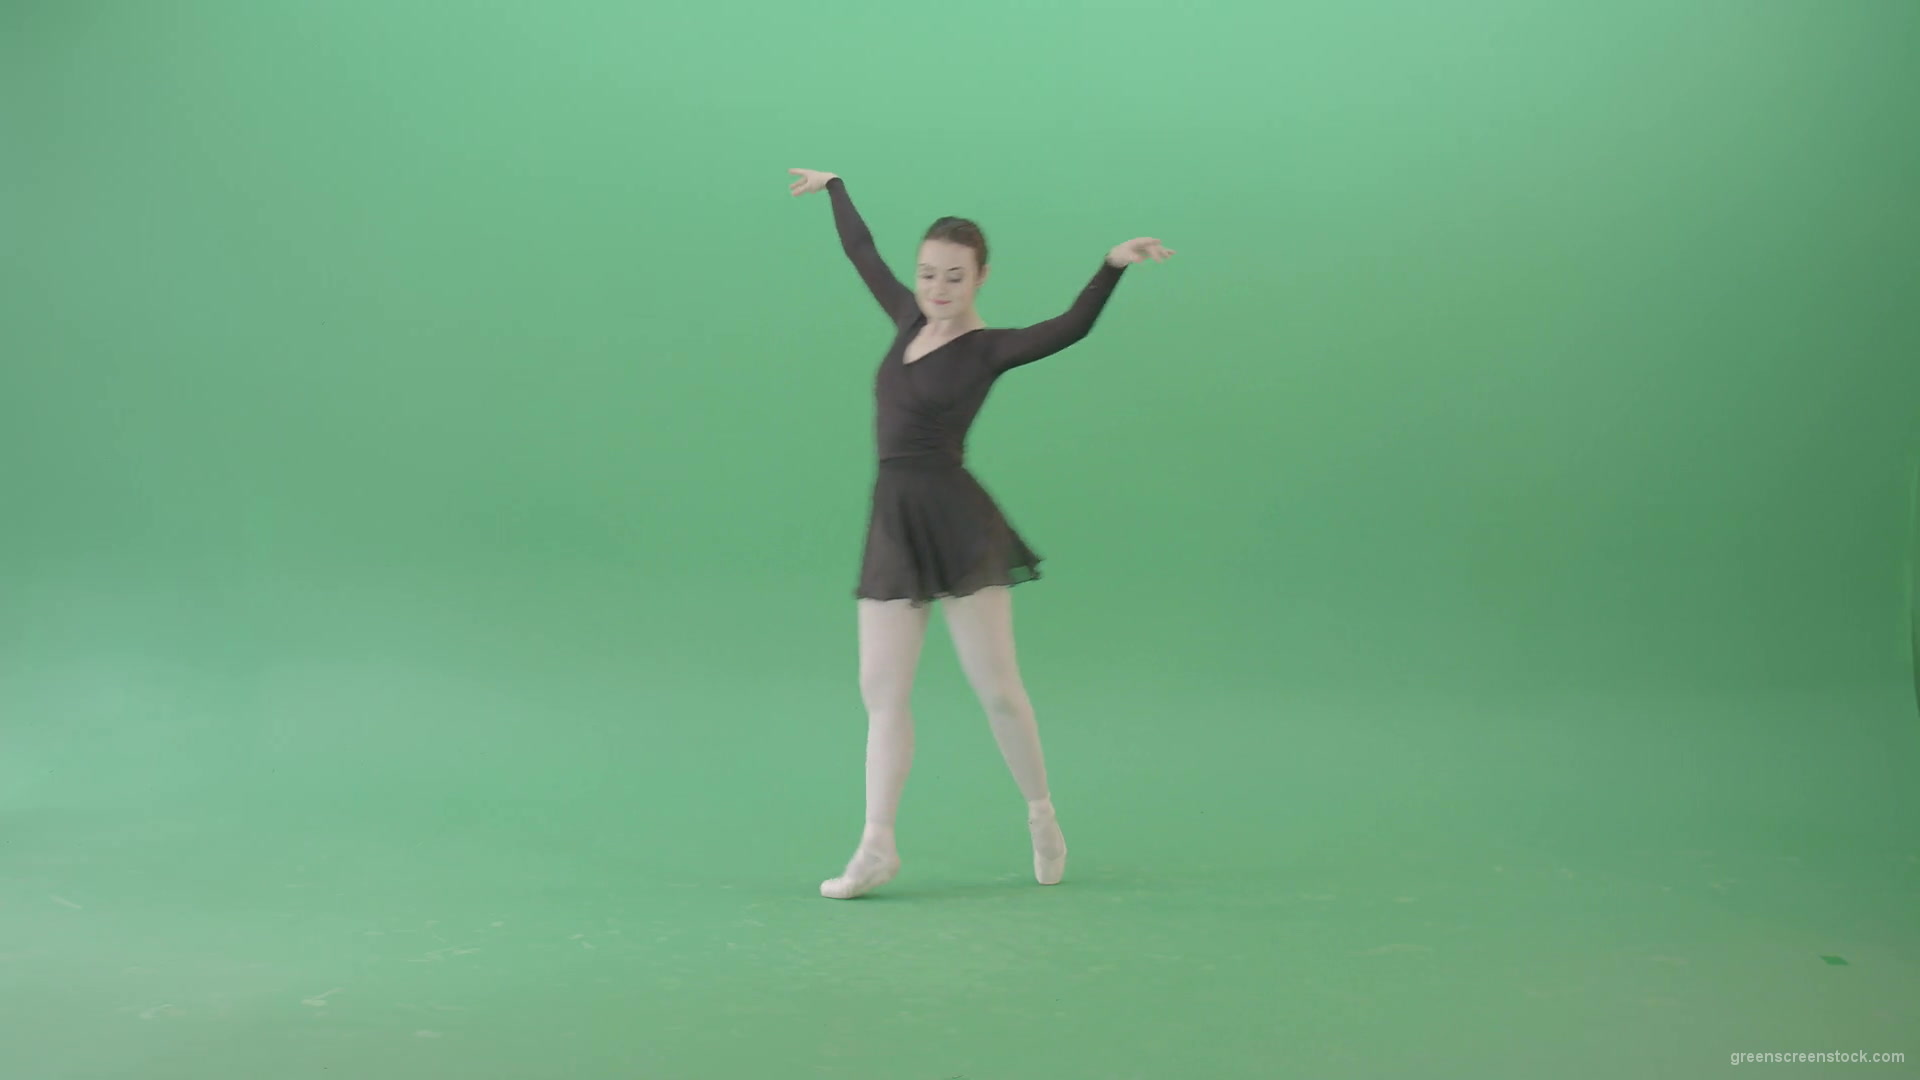 Russian-ballet-dancing-girl-in-black-body-wear-dress-dancing-isolated-on-green-screen-4K-Video-Footage-1920_009 Green Screen Stock